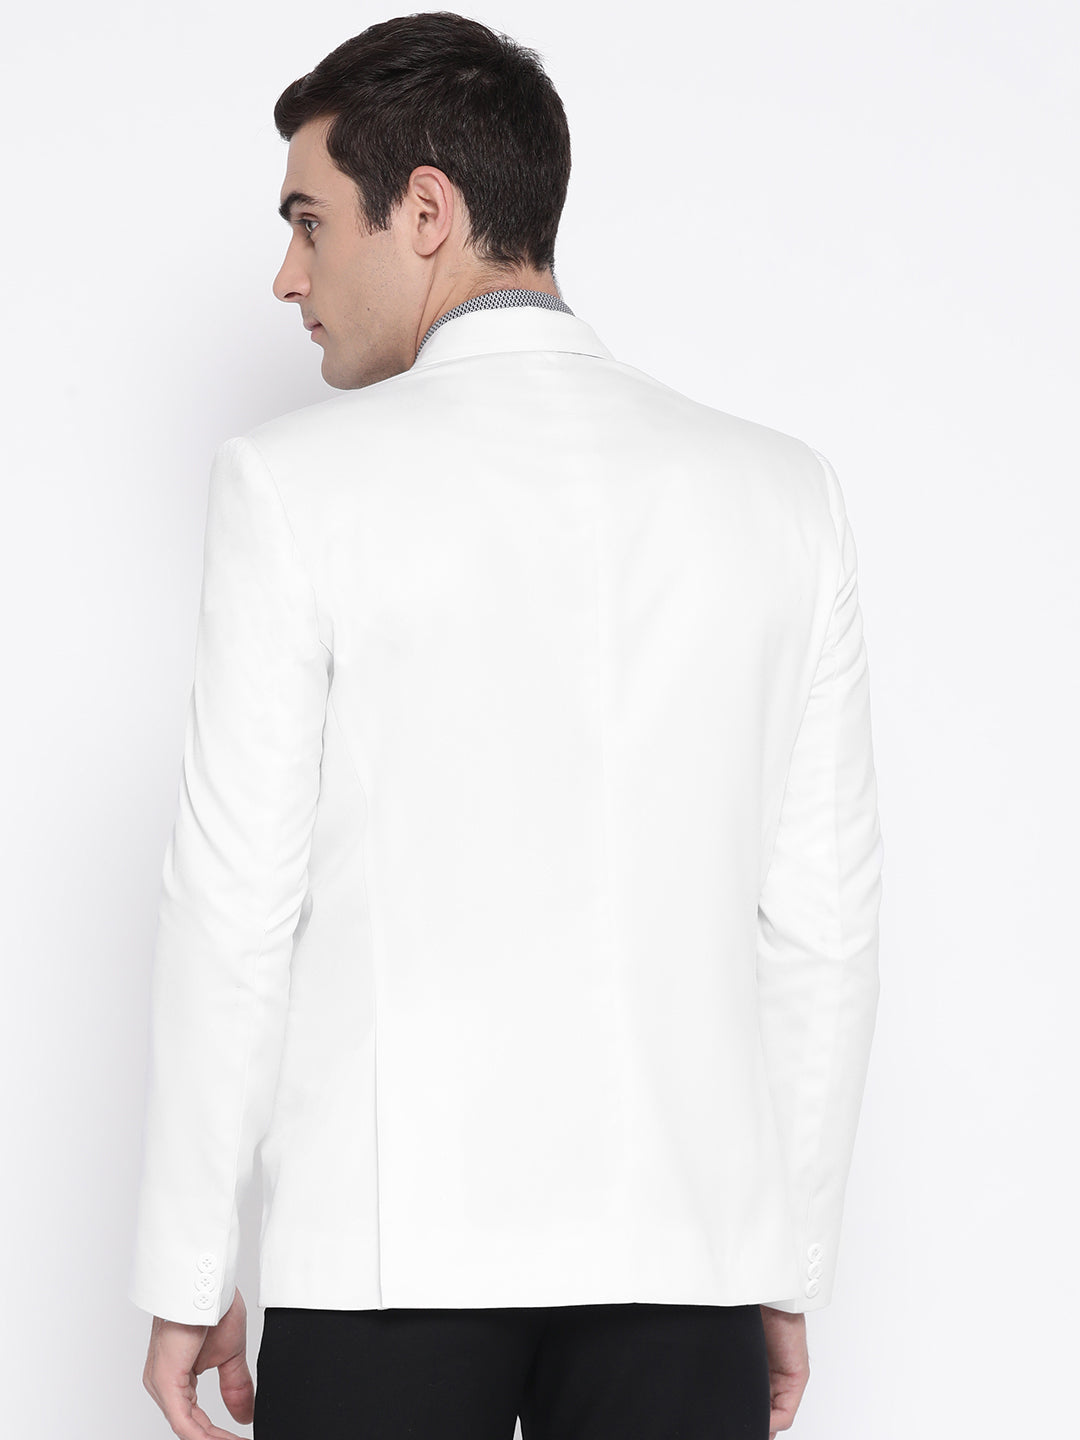 Luxrio Solid Tuxedo Blazer for Men Casual Party Wear Slim Fit Jacket